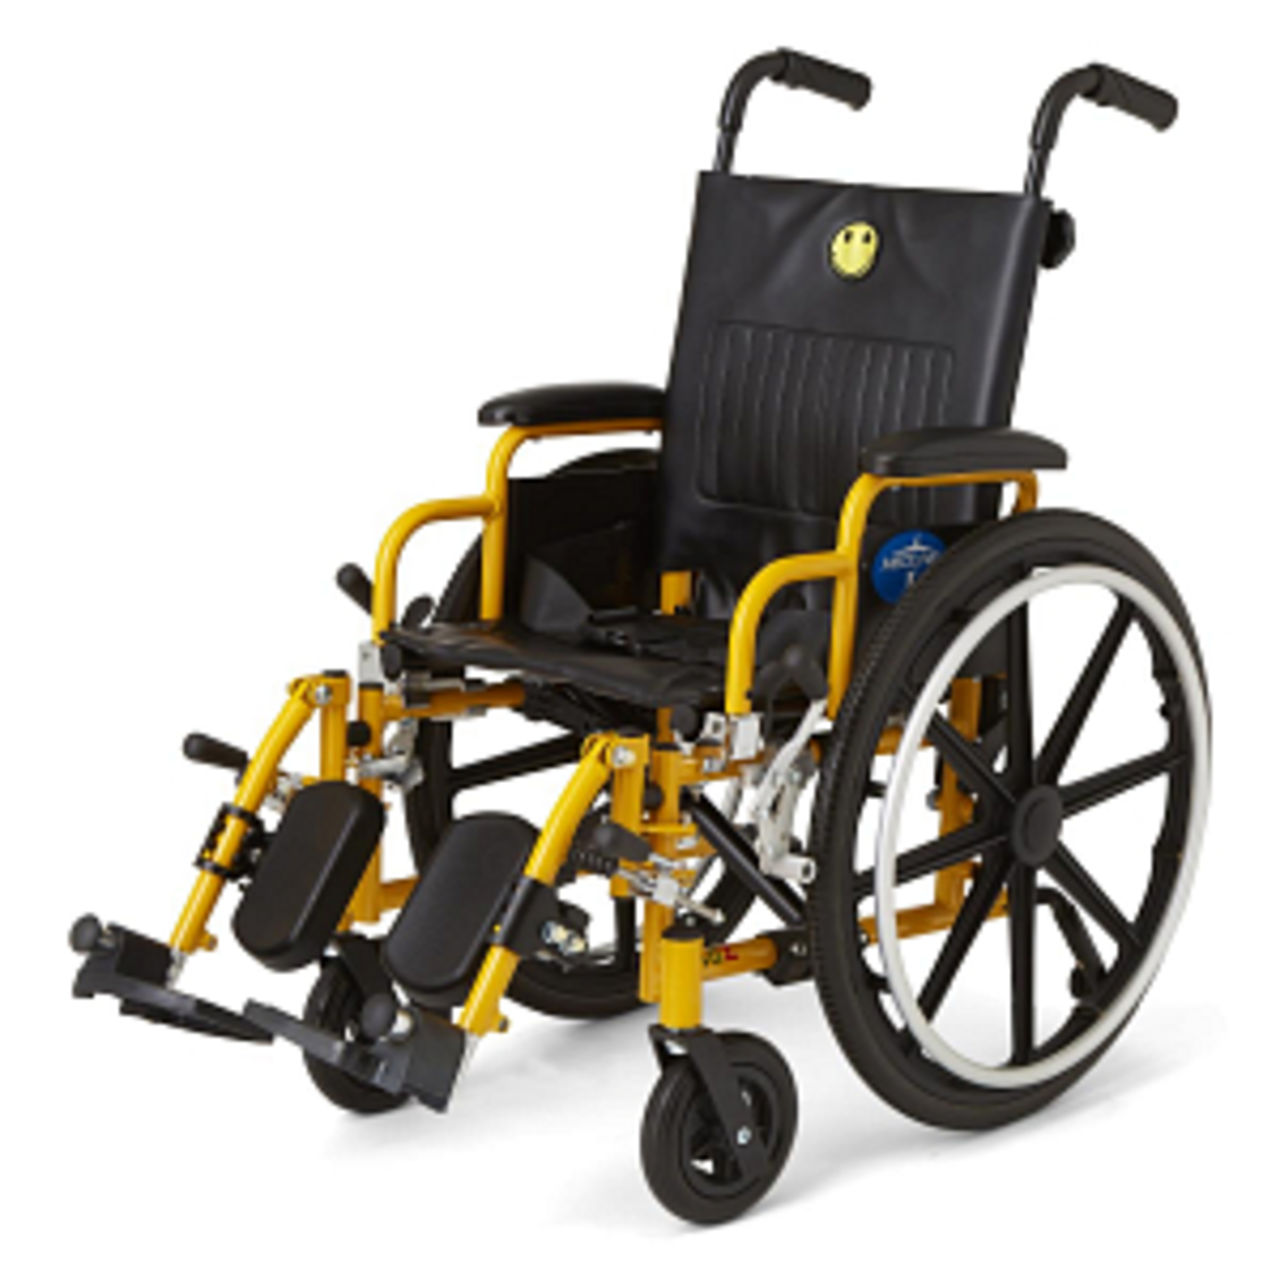 pediatric wheelchair yellow